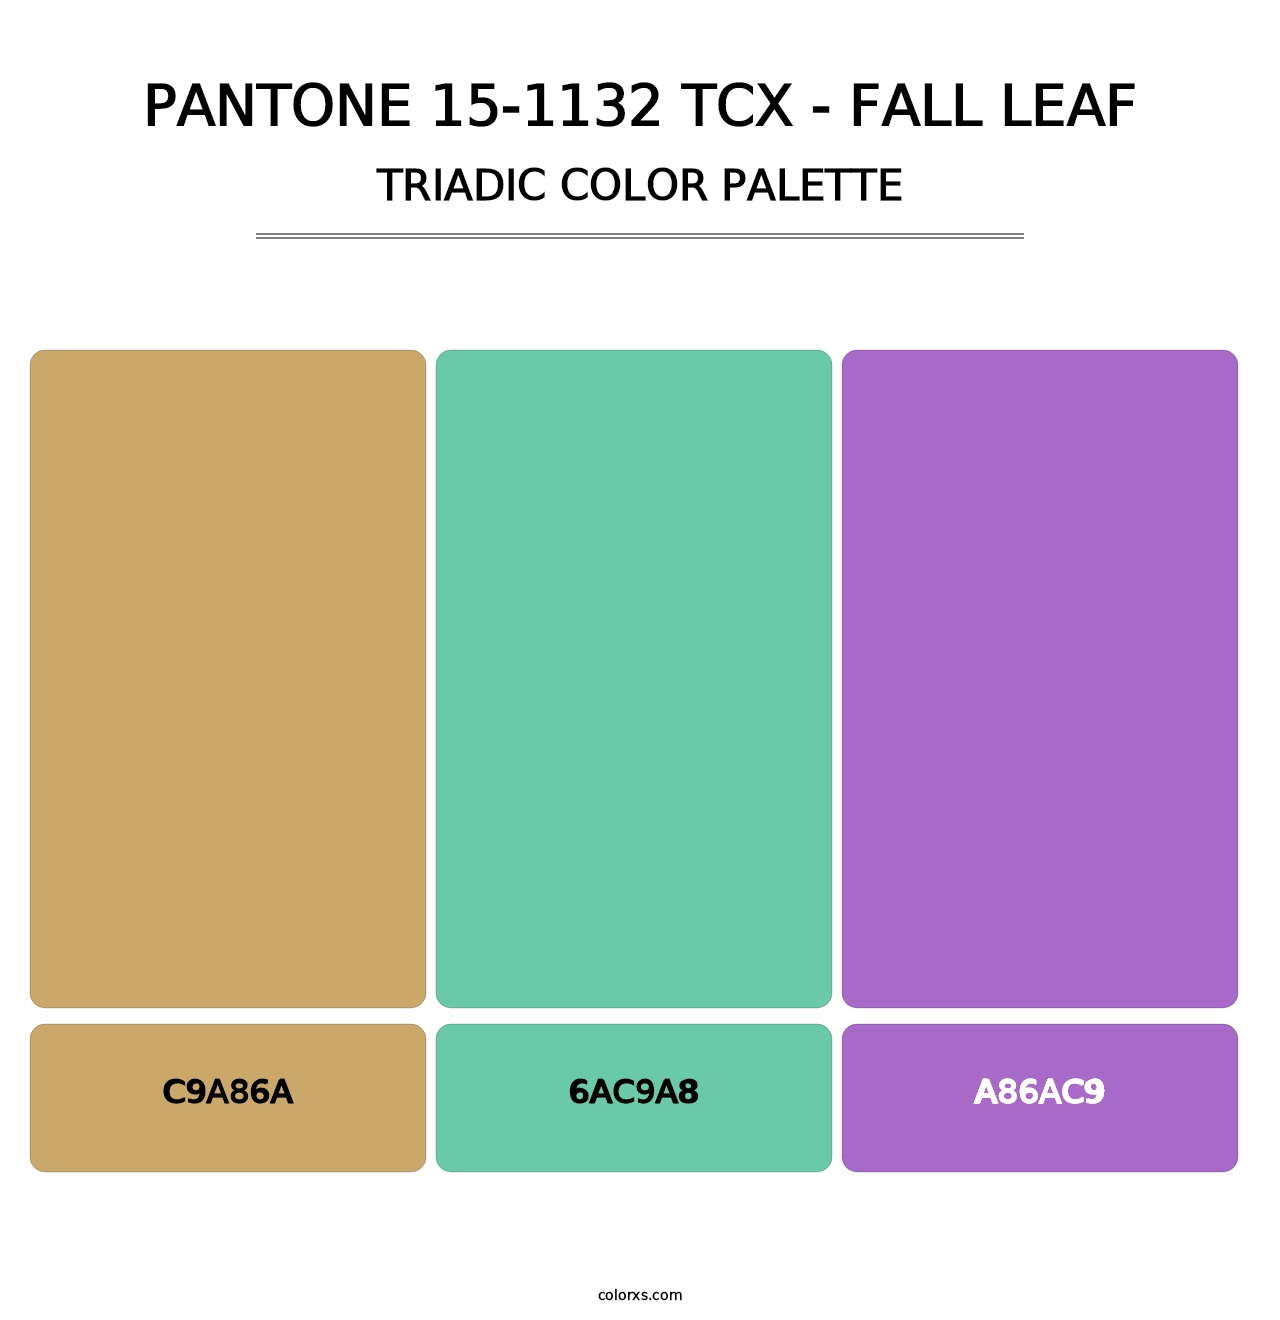 PANTONE 15-1132 TCX - Fall Leaf - Triadic Color Palette